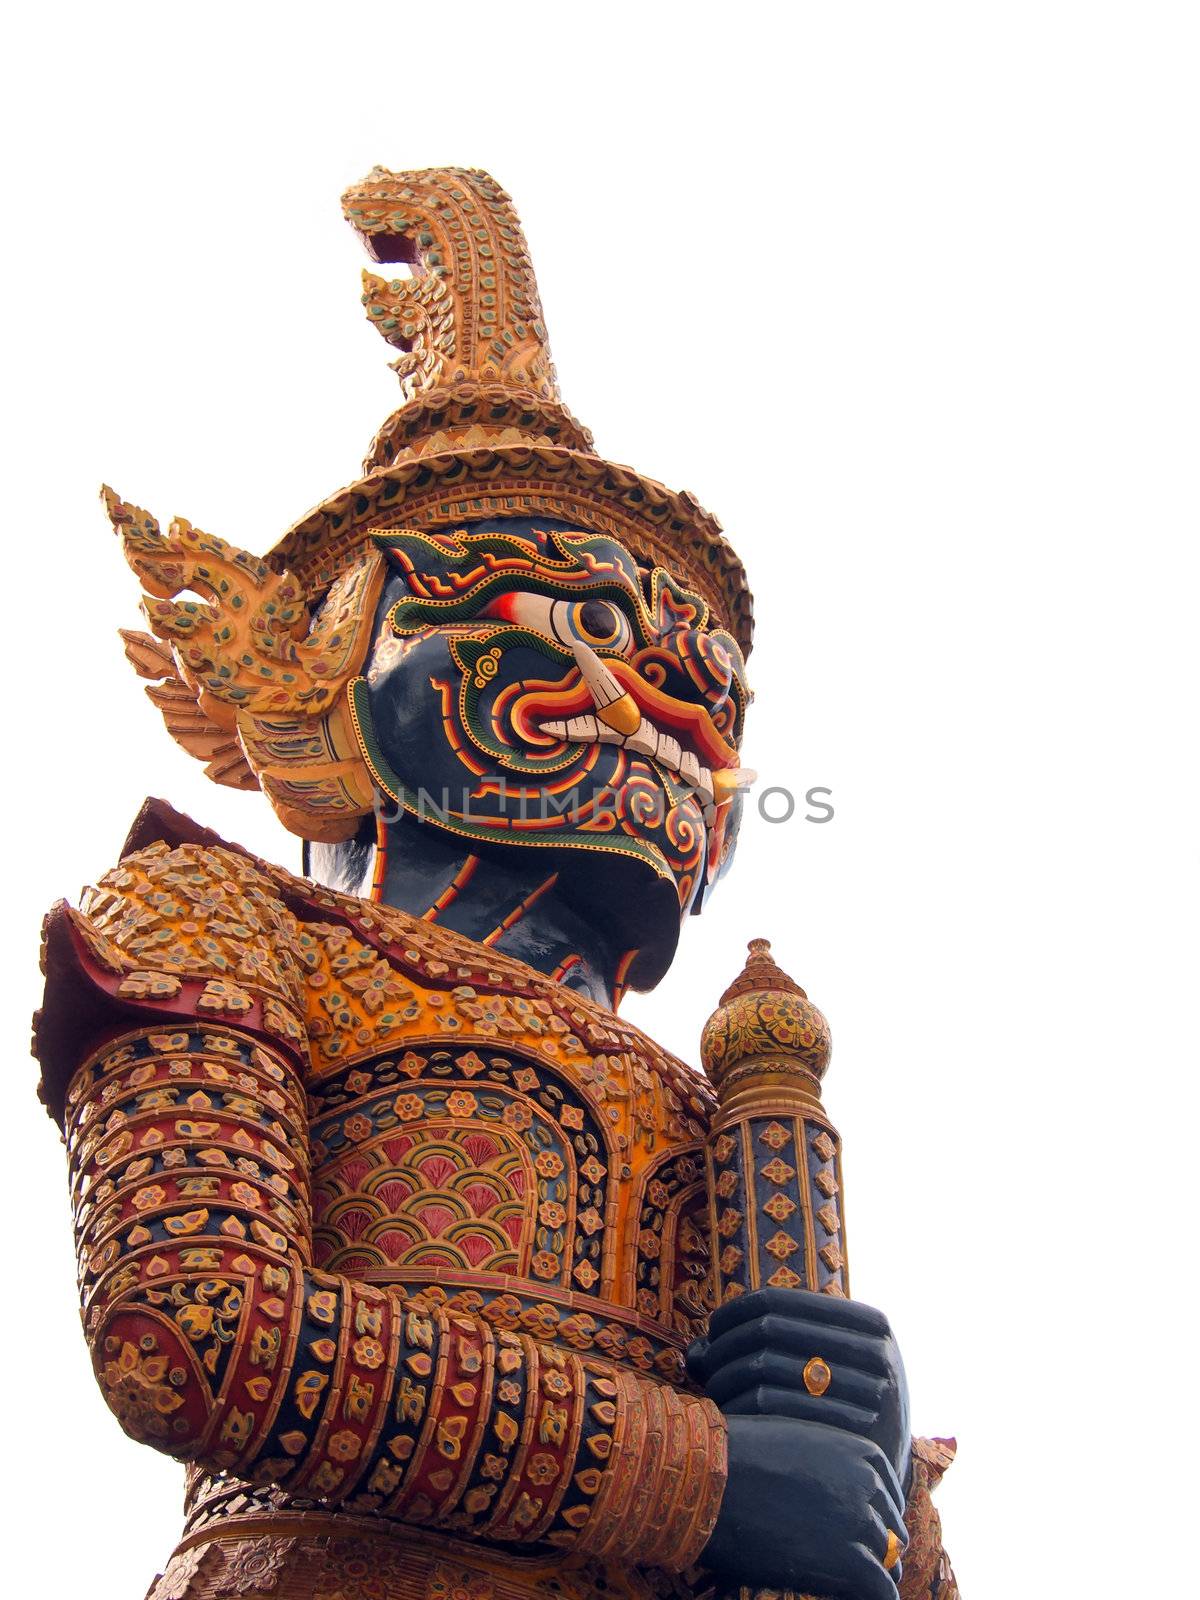 giant,the gaurdian at the emarald buddha temple,bankok,thailand